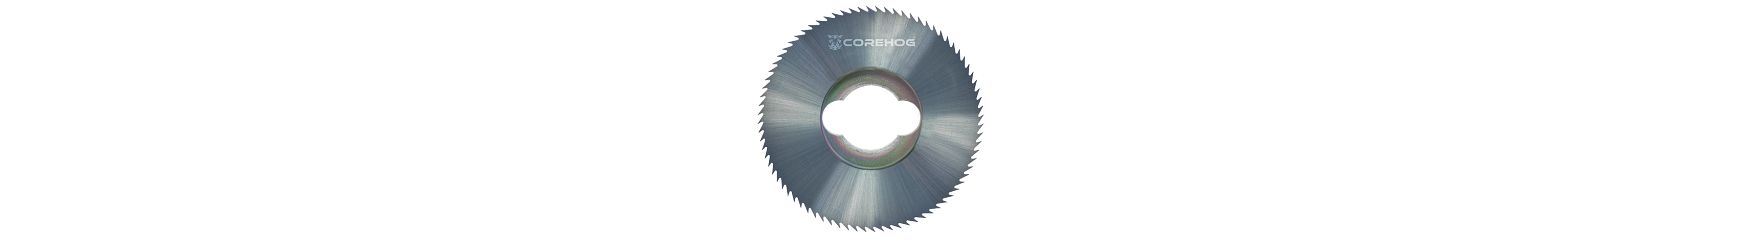 Finishing Core Tools-Large Coreslicers